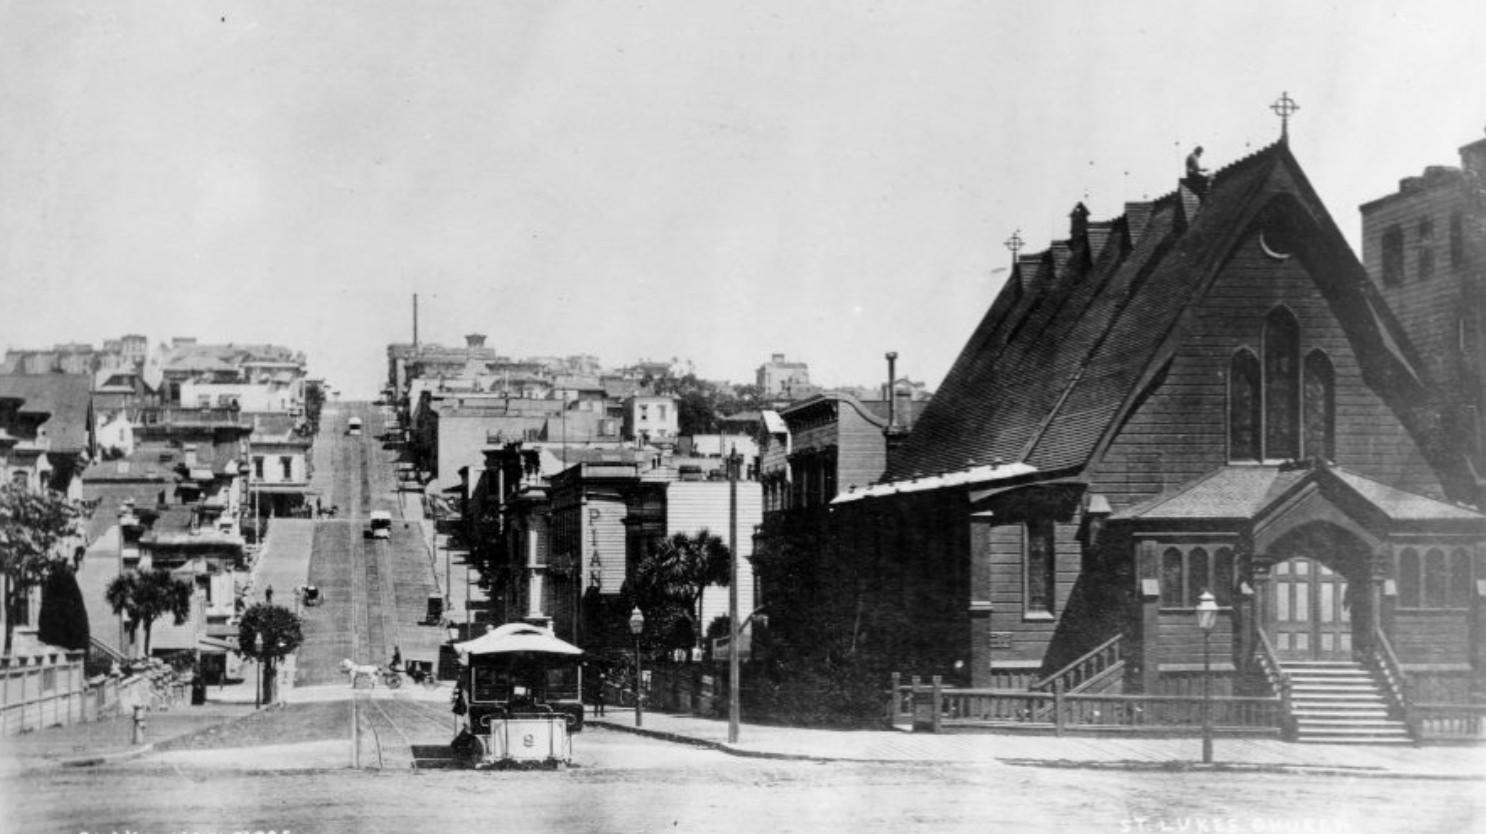 Clay Street at Van Ness, 1888